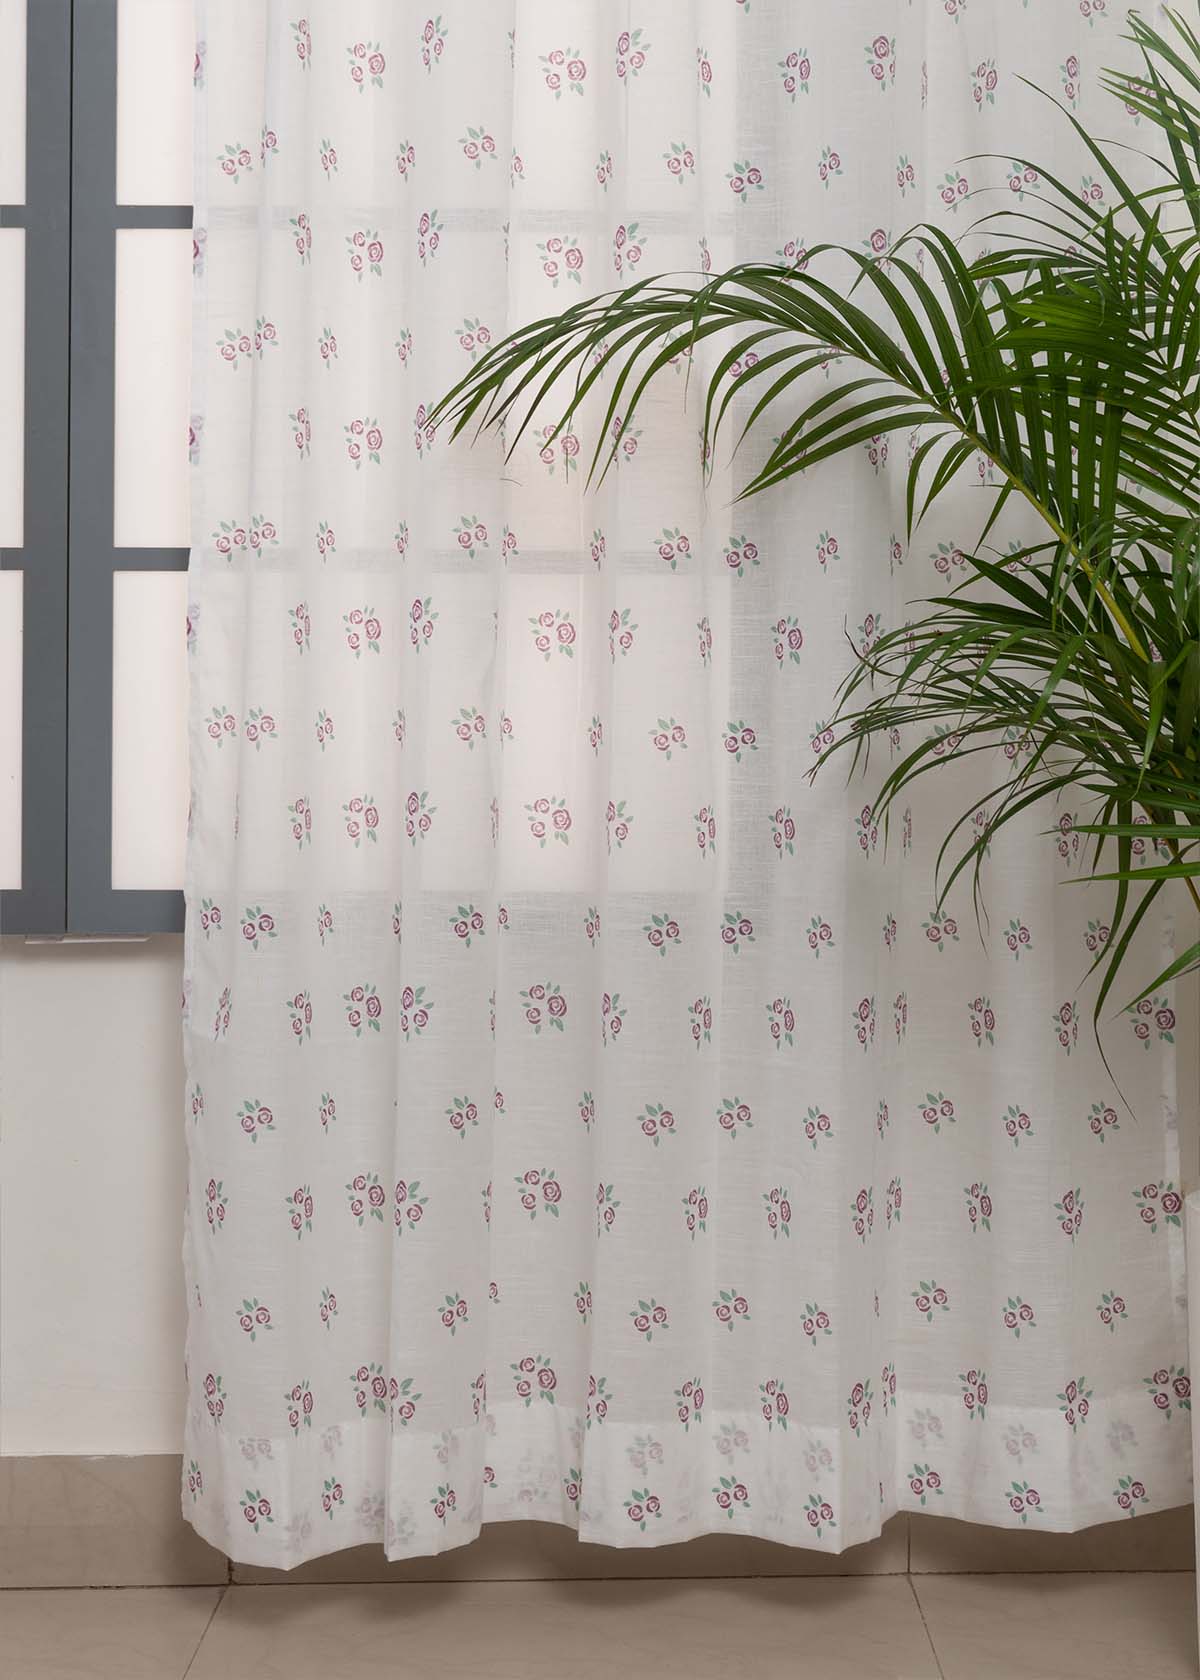 Rose Garden 100% Cotton Sheer floral curtain for Living room - Light filtering - Lavender - Pack of 1